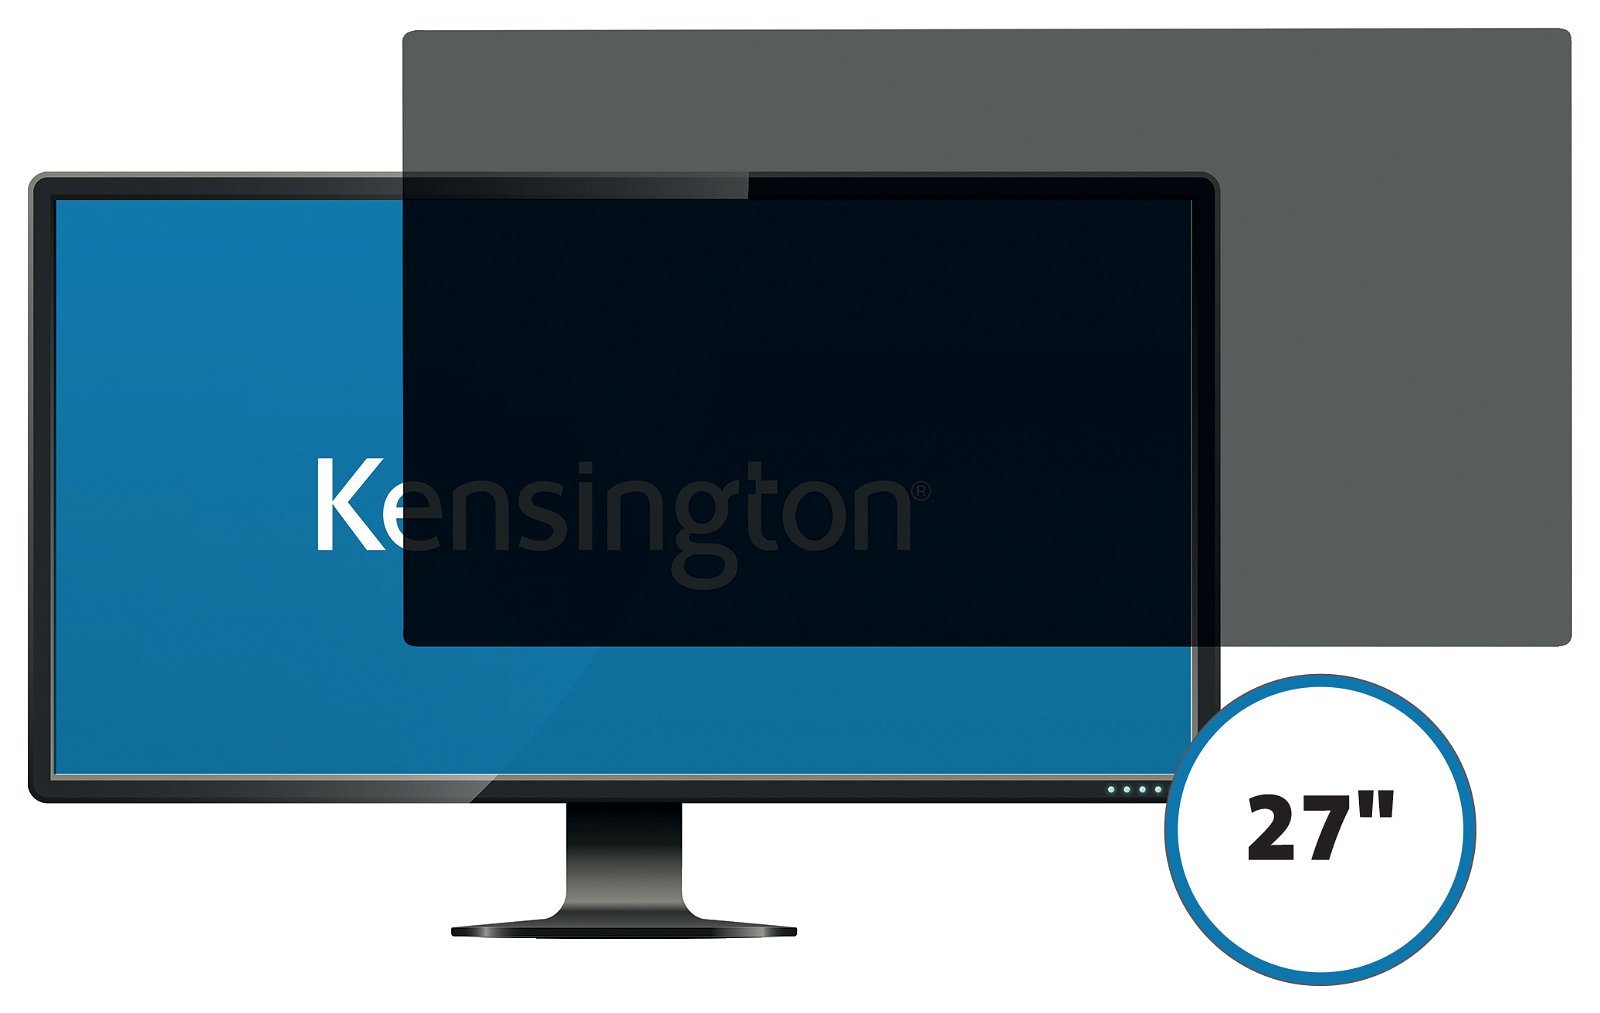 Kensington skærmfilter 27" 16:9 transparent